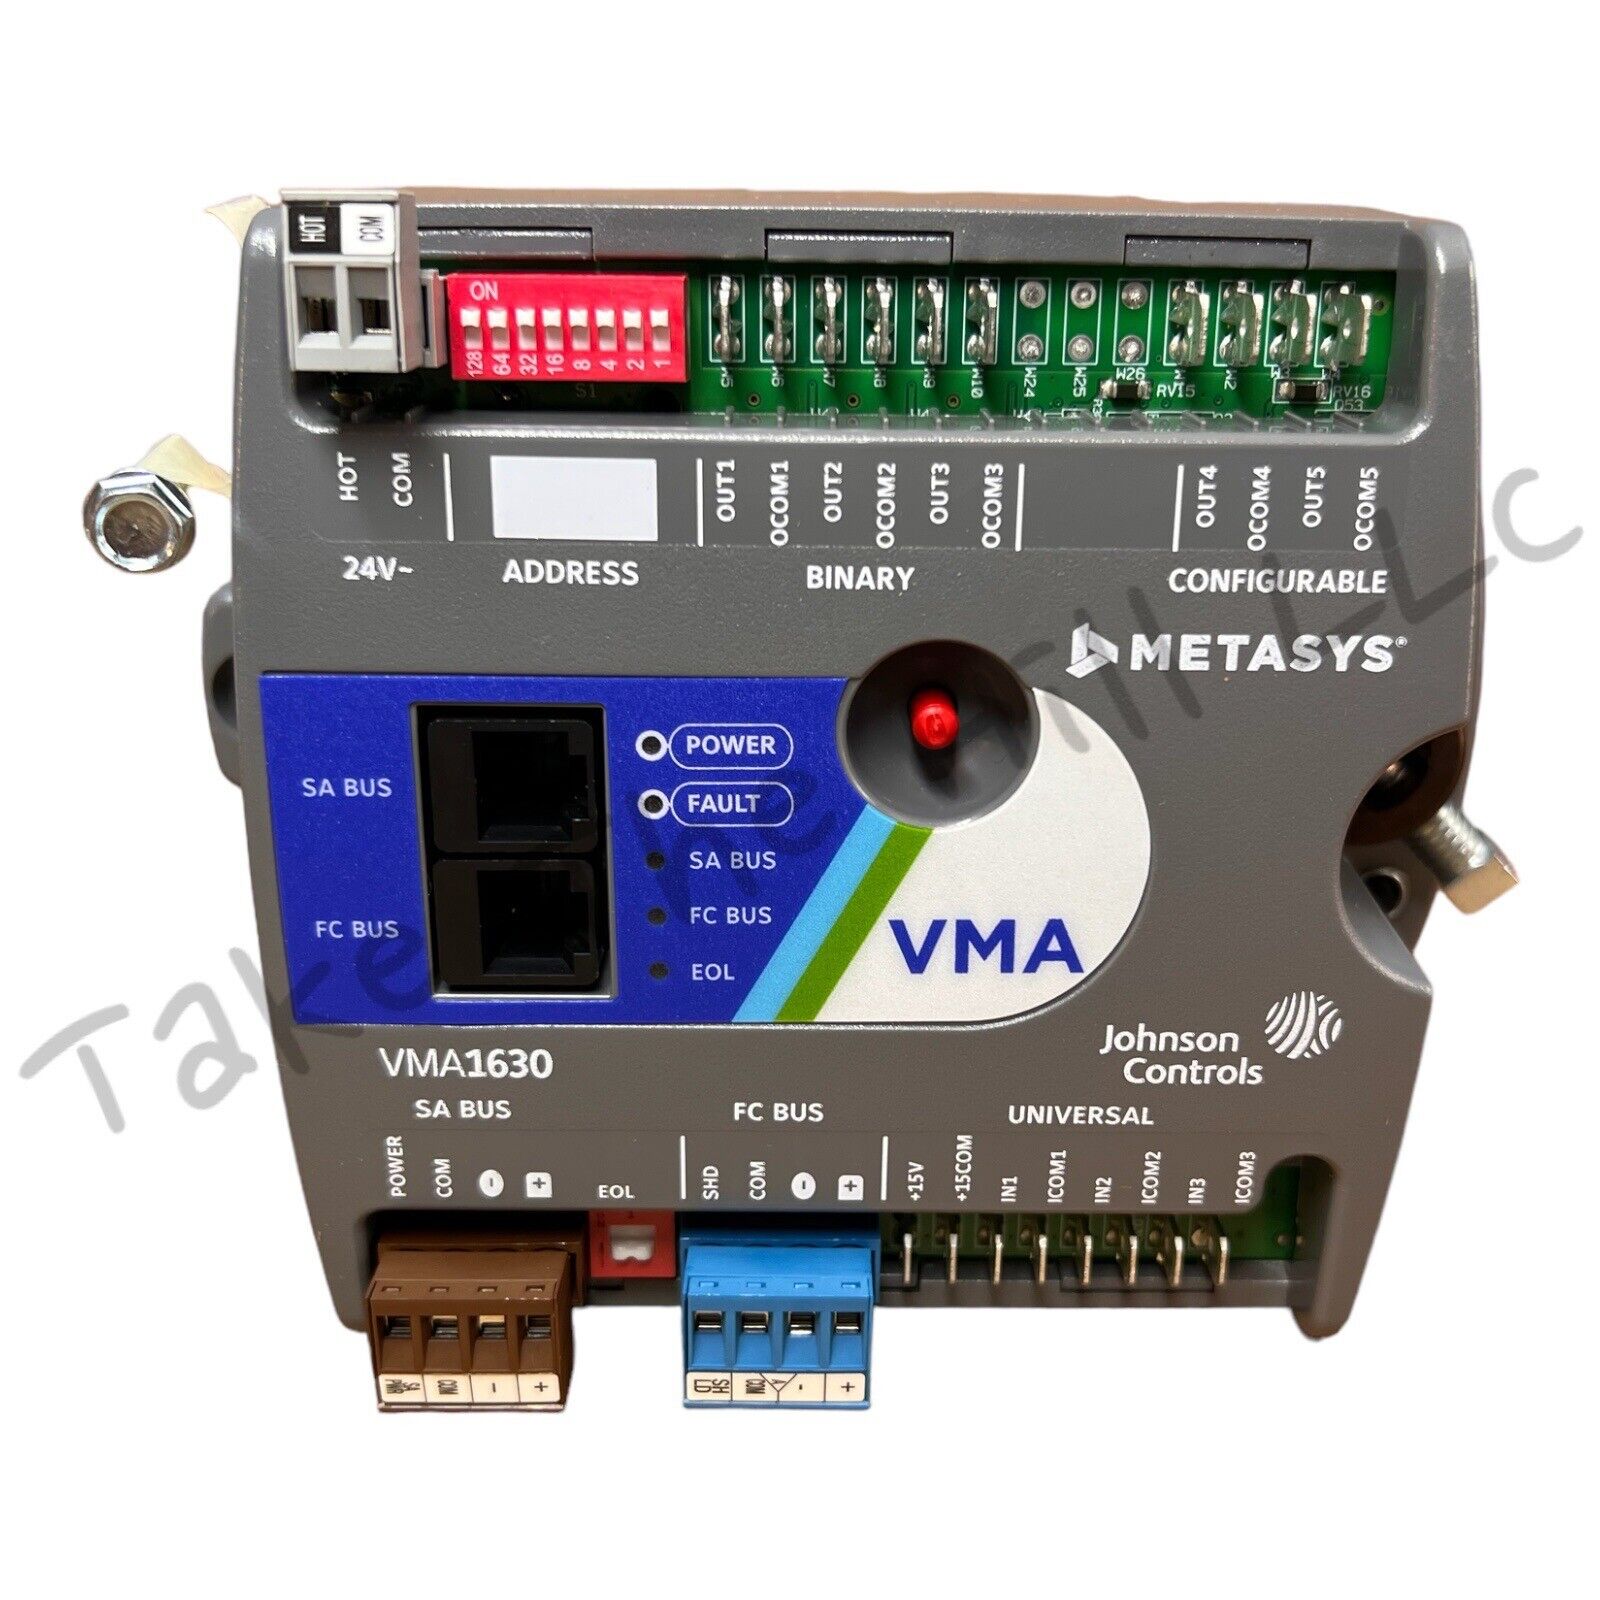 *REDUCED* Johnson Controls MS-VMA1630-1 Metasys VAV Controller Ver 6.2 NEW